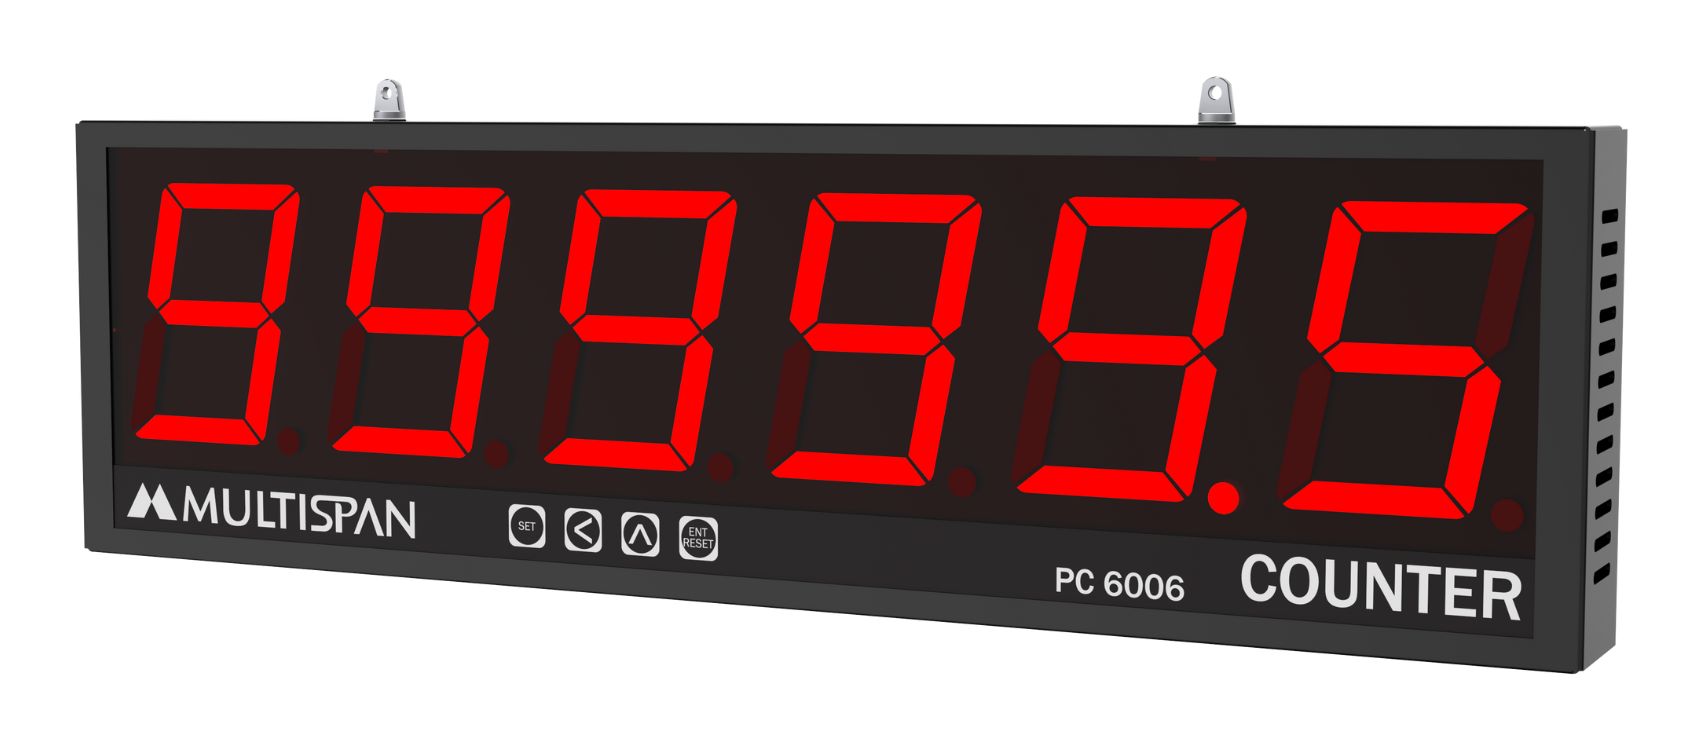 PC-6006 Jumbo Display Indicator - product image